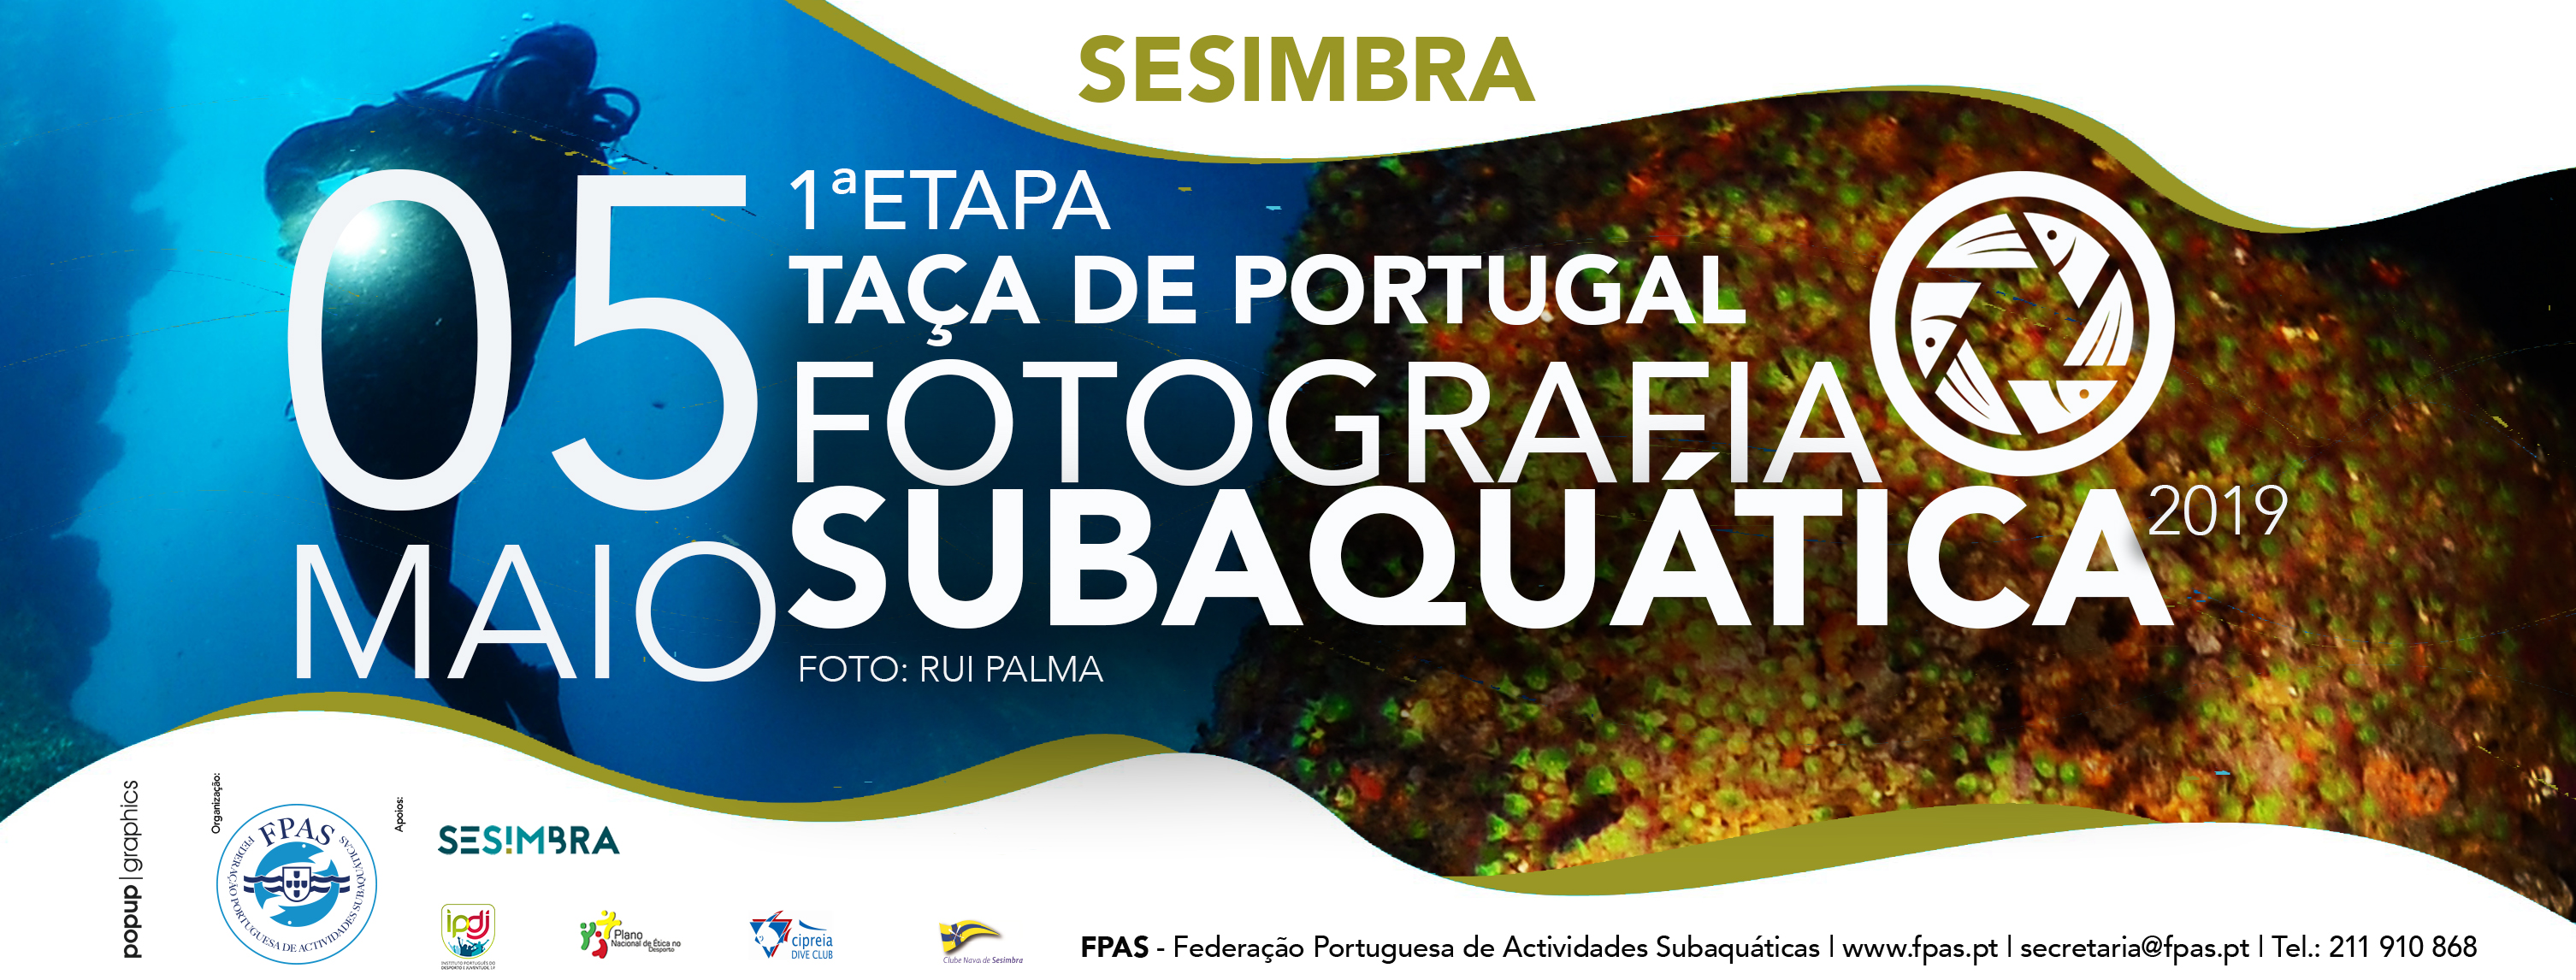 Taça de Portugal de Fotografia Subaquática - 1ª Etapa